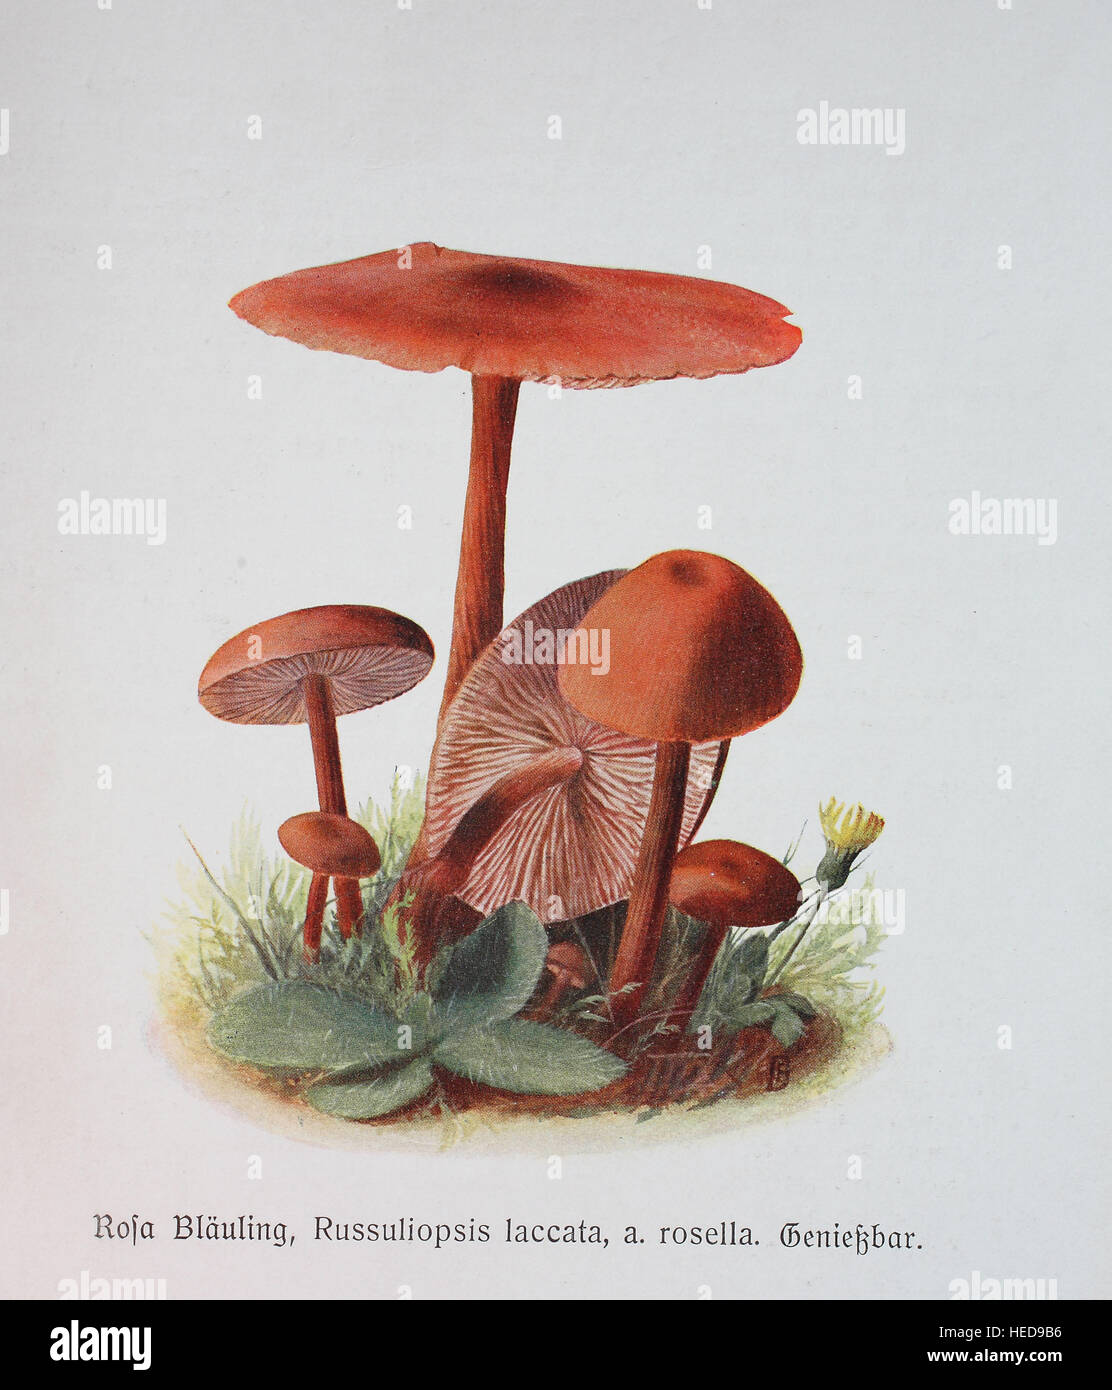 Rosa Blaeuling, Russuliopsis Laccata, Digitale Reproduktion Einer Illustration von Emil Doerstling (1859-1940) Stockfoto